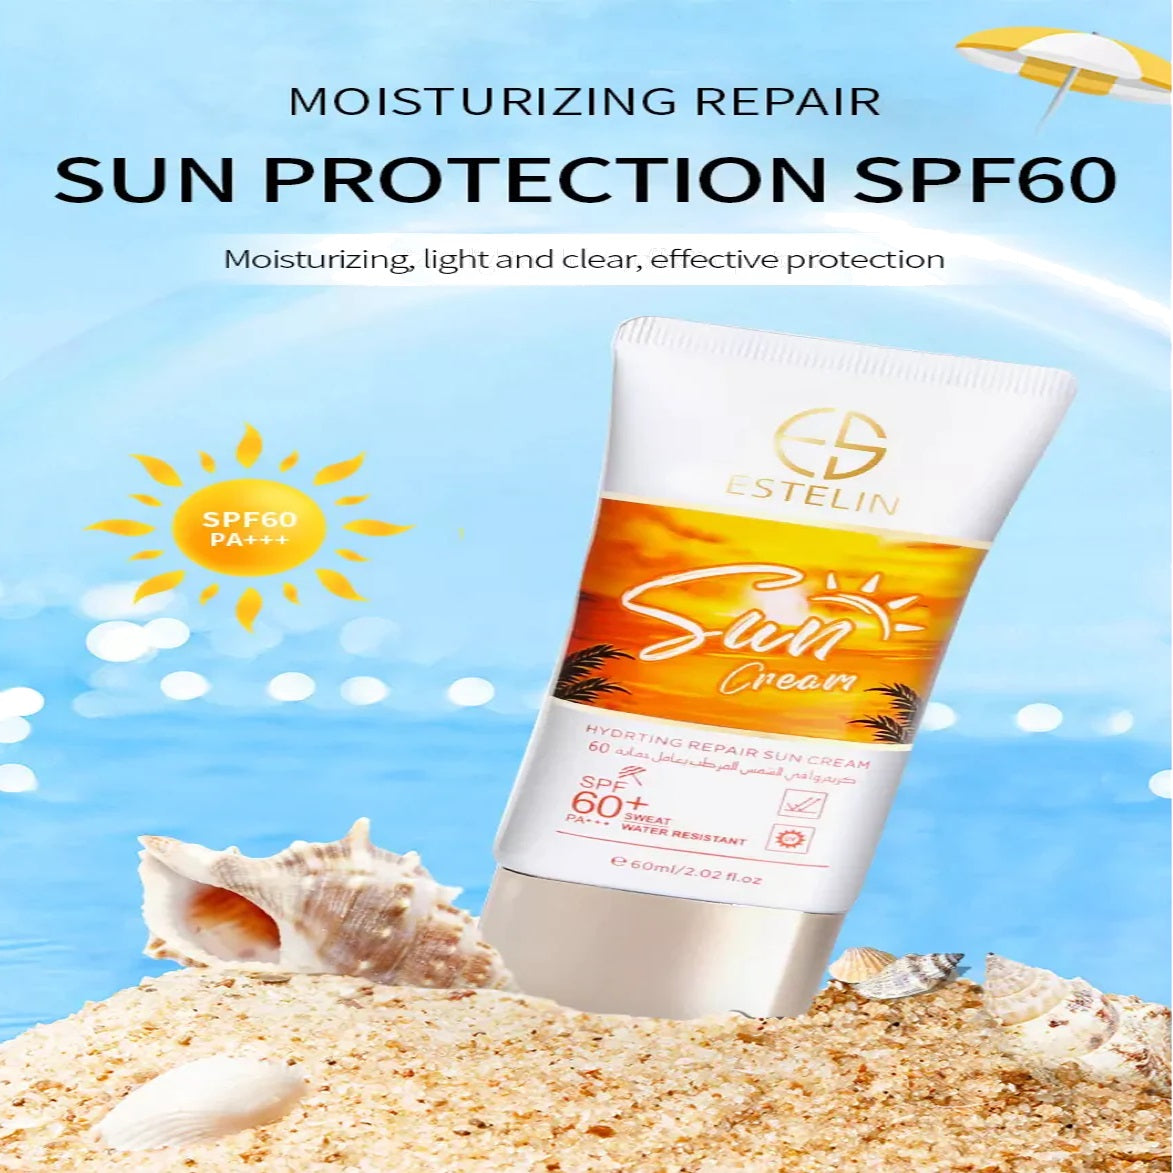 Estelin Sun Cream Hydrating Repair Sun Cream SPF 60+, 60ml